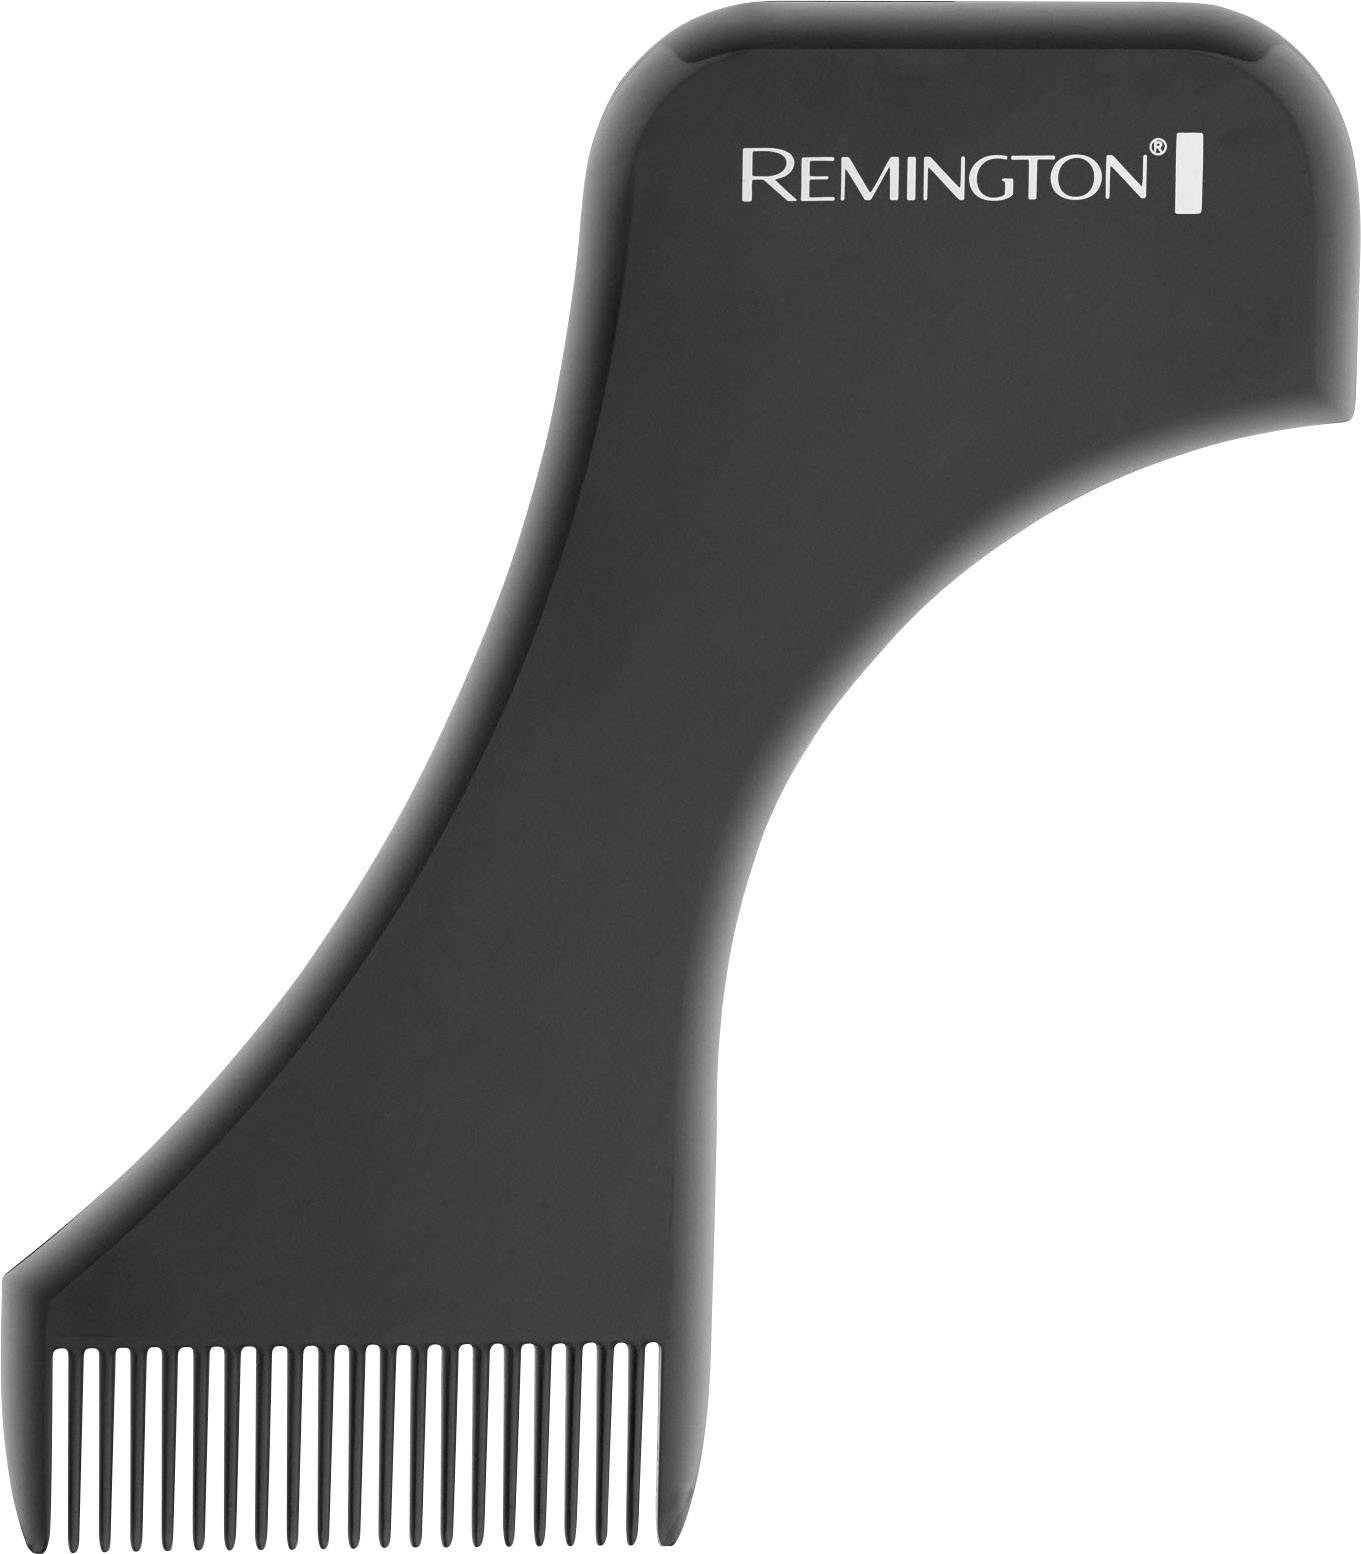 remington lithium barba beard trimmer mb350l